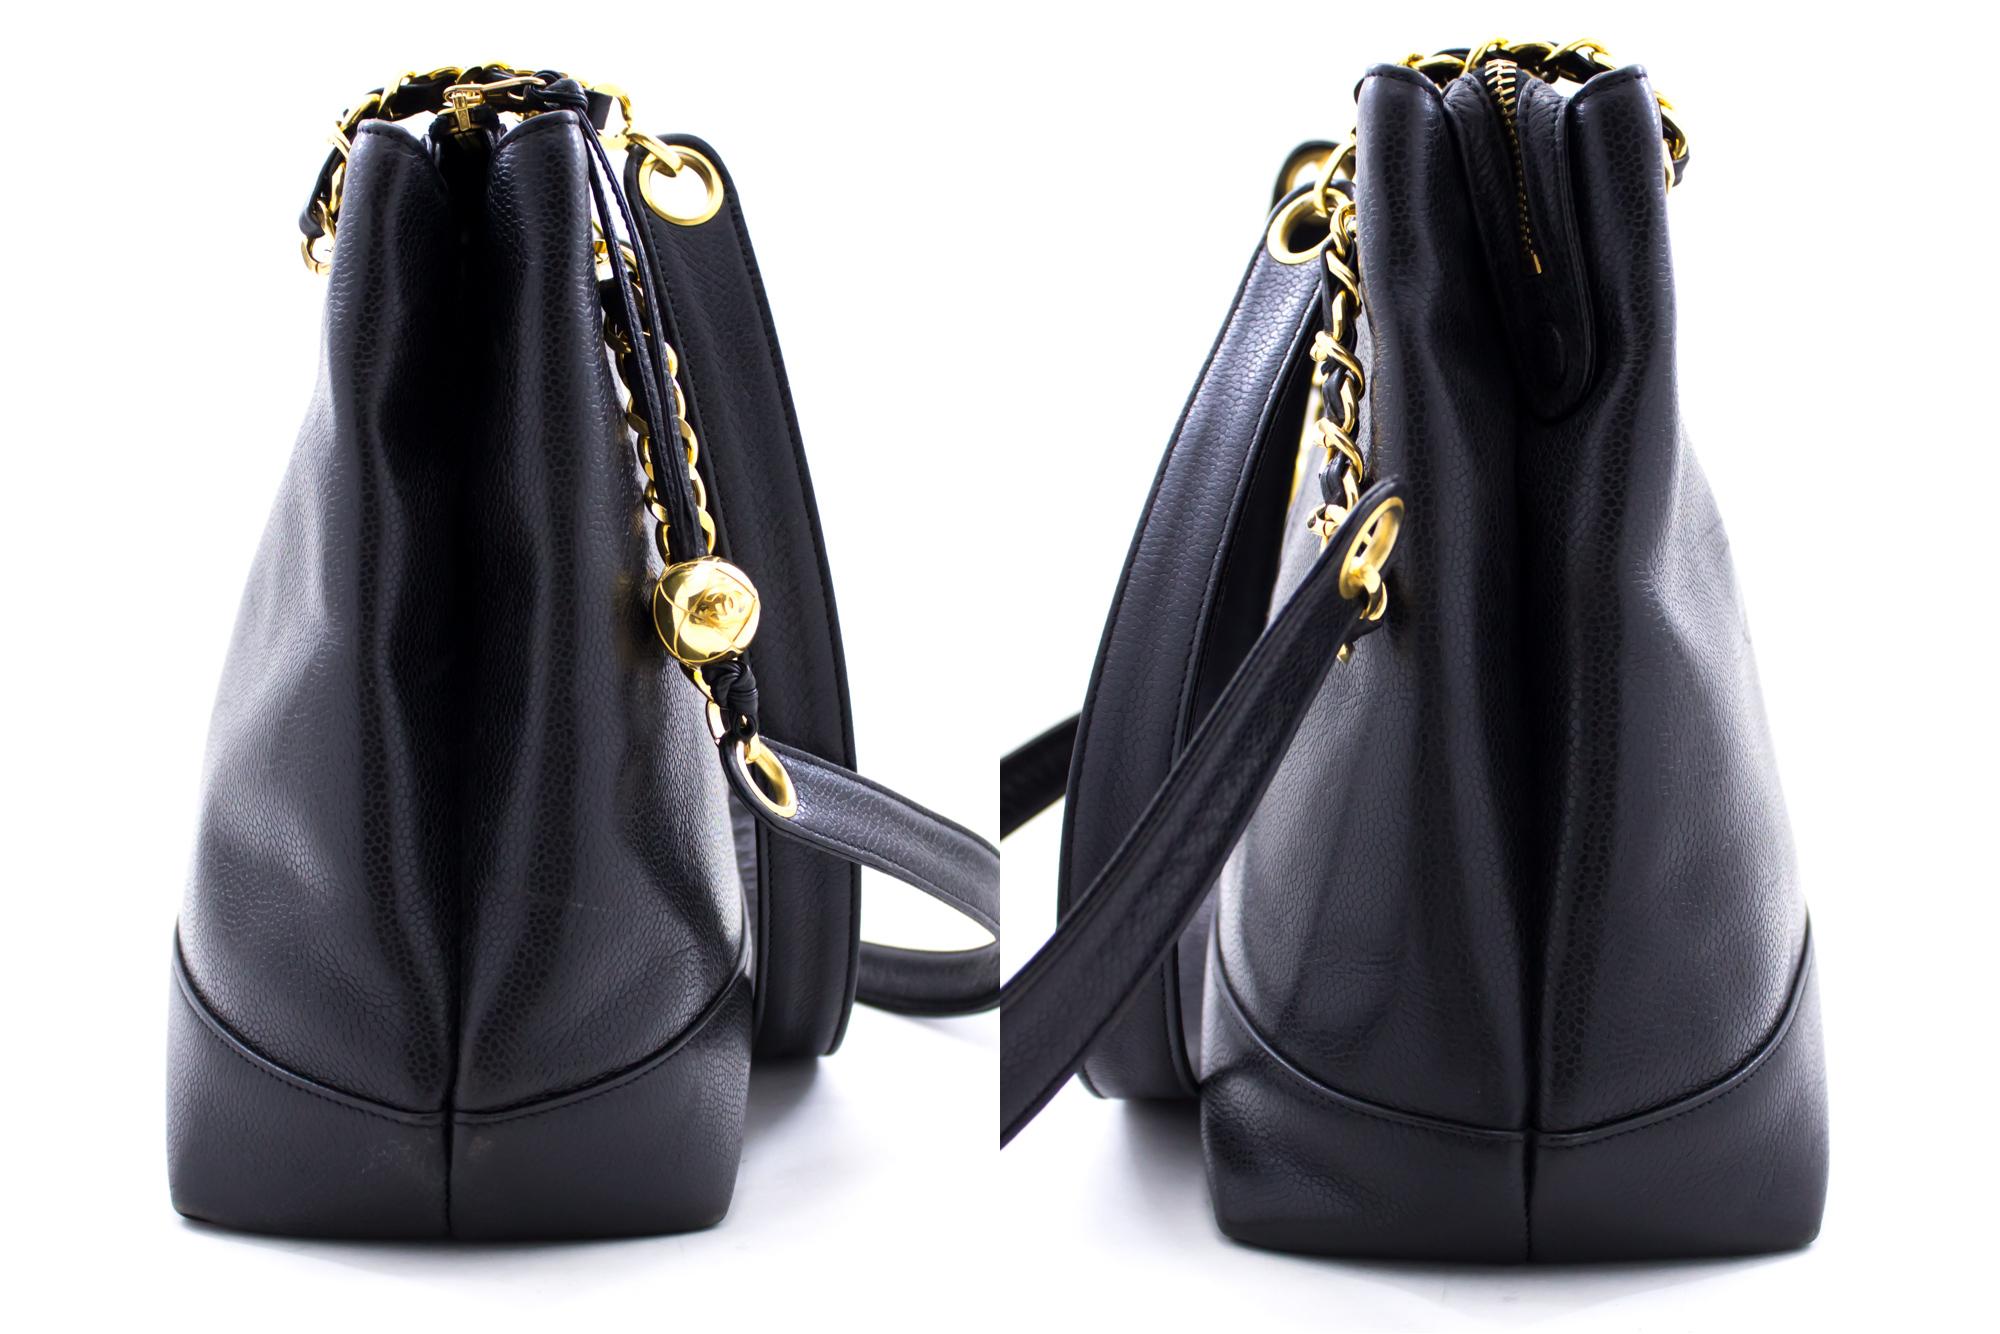 Women's CHANEL Caviar Large Chain Shoulder Bag Leather Black Zip Goldper